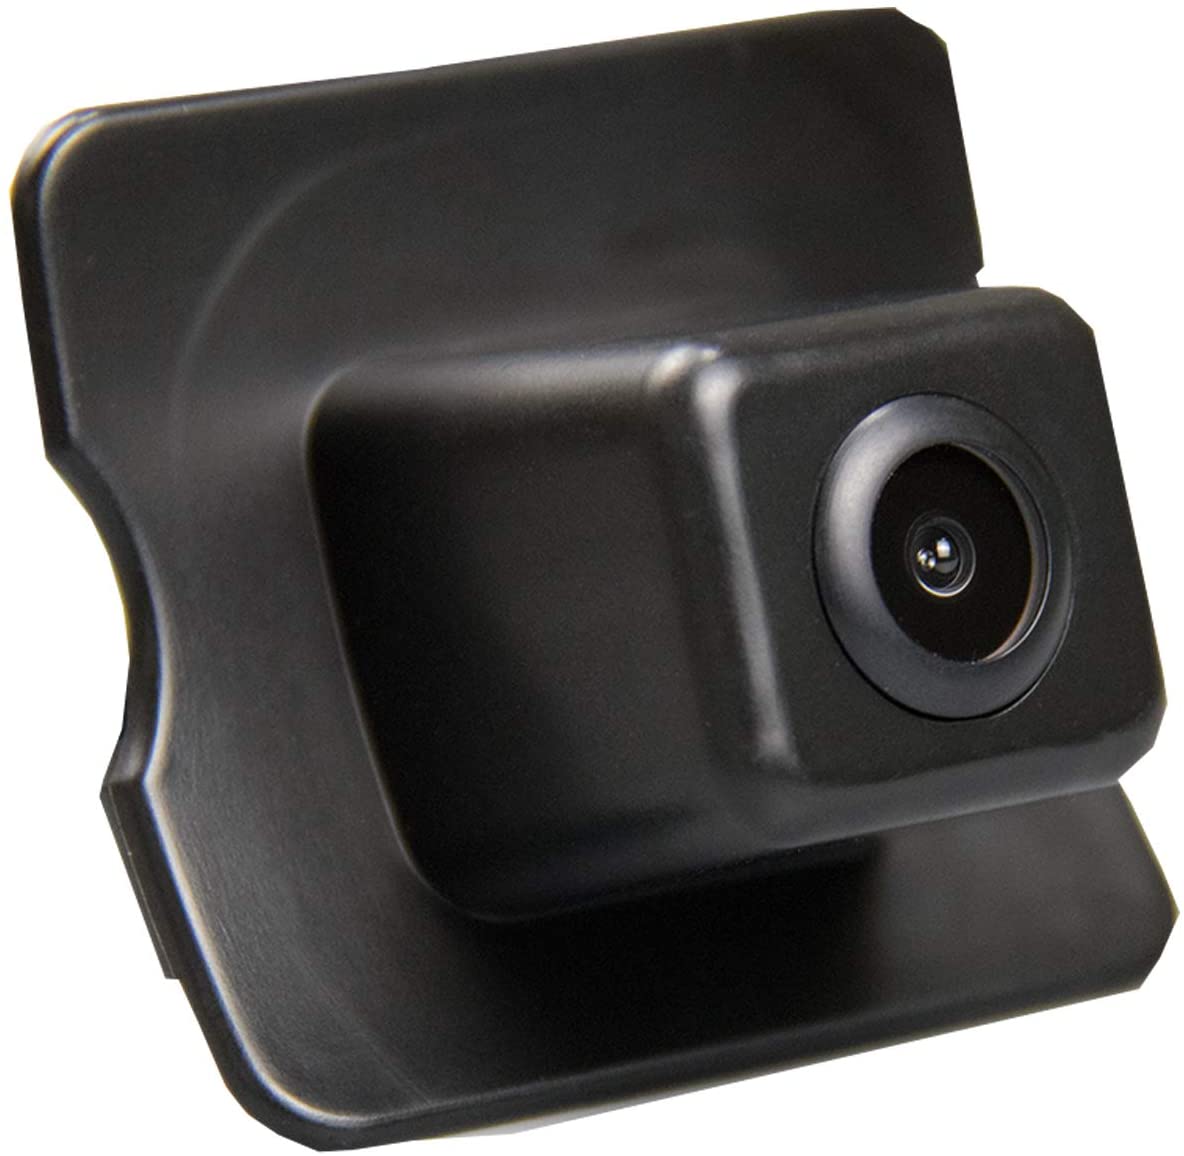 HD 720p Backup Camera Waterproof Rear-View License Plate Rear Reverse Parking Camera for Mercedes MB W164 W163 W251 X164 ML400 ML350 GL450 GL350 GL500 R-Class (W251)